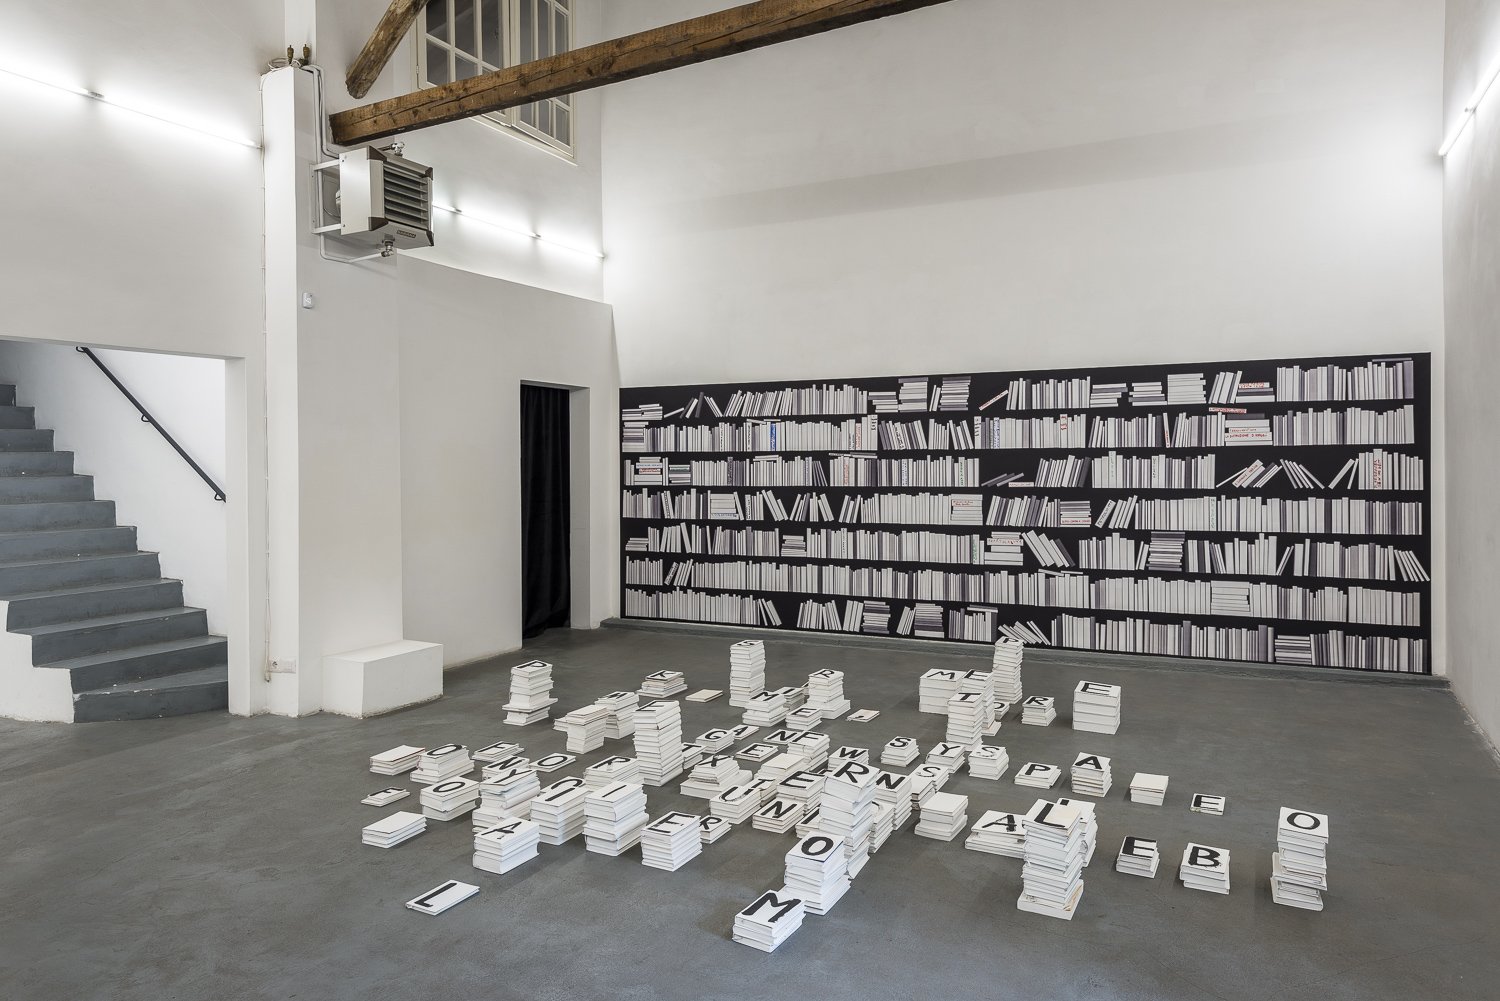 Jaro Varga, exhibition view, About Books, 2018. Photo by Sebastiano Luciano, courtesy AlbumArte